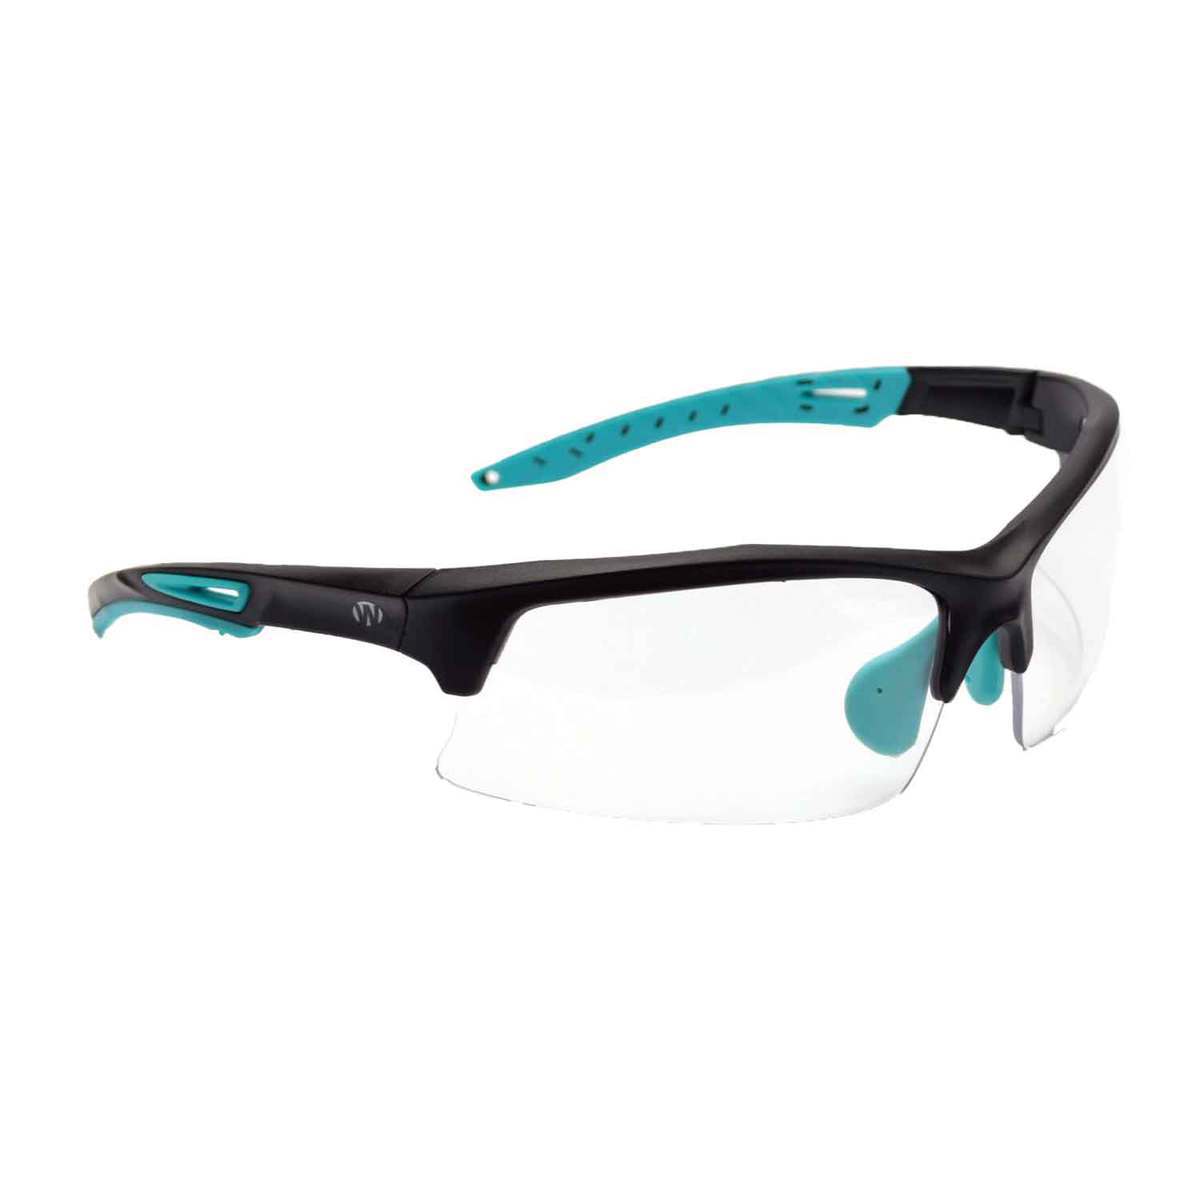 https://www.sportsmans.com/medias/walkers-impact-resistant-sport-glasses-teal-1627396-1.jpg?context=bWFzdGVyfGltYWdlc3wyNjY0NnxpbWFnZS9qcGVnfGFXMWhaMlZ6TDJnNFlpOW9Nemd2T1RNNE9URTNNRFF5TlRnNE5pNXFjR2N8OTkzZWE1NTQ3MGYyNTJmYTNkYWUyNWNlNGFjMWNmNTkzOTdhNWVjYzU0OTJhNDJhOWZlNjEyYjlkYTAzNzk0OA